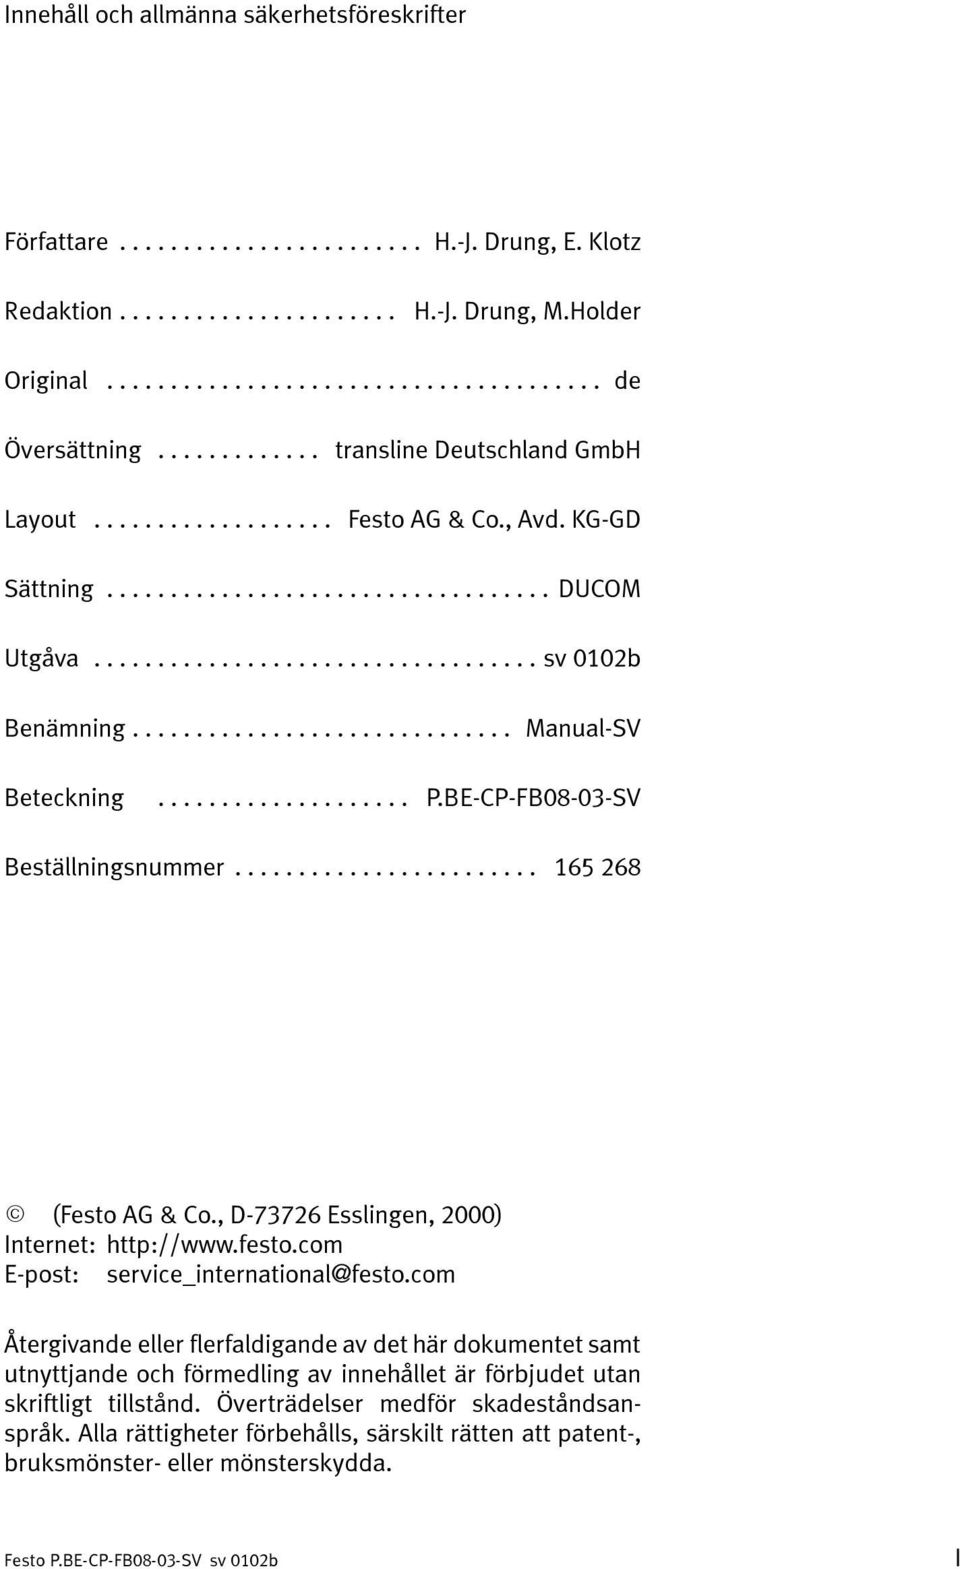 , D-7376 Esslingen, 000) Internet: http://www.festo.com E-post: service_international@festo.